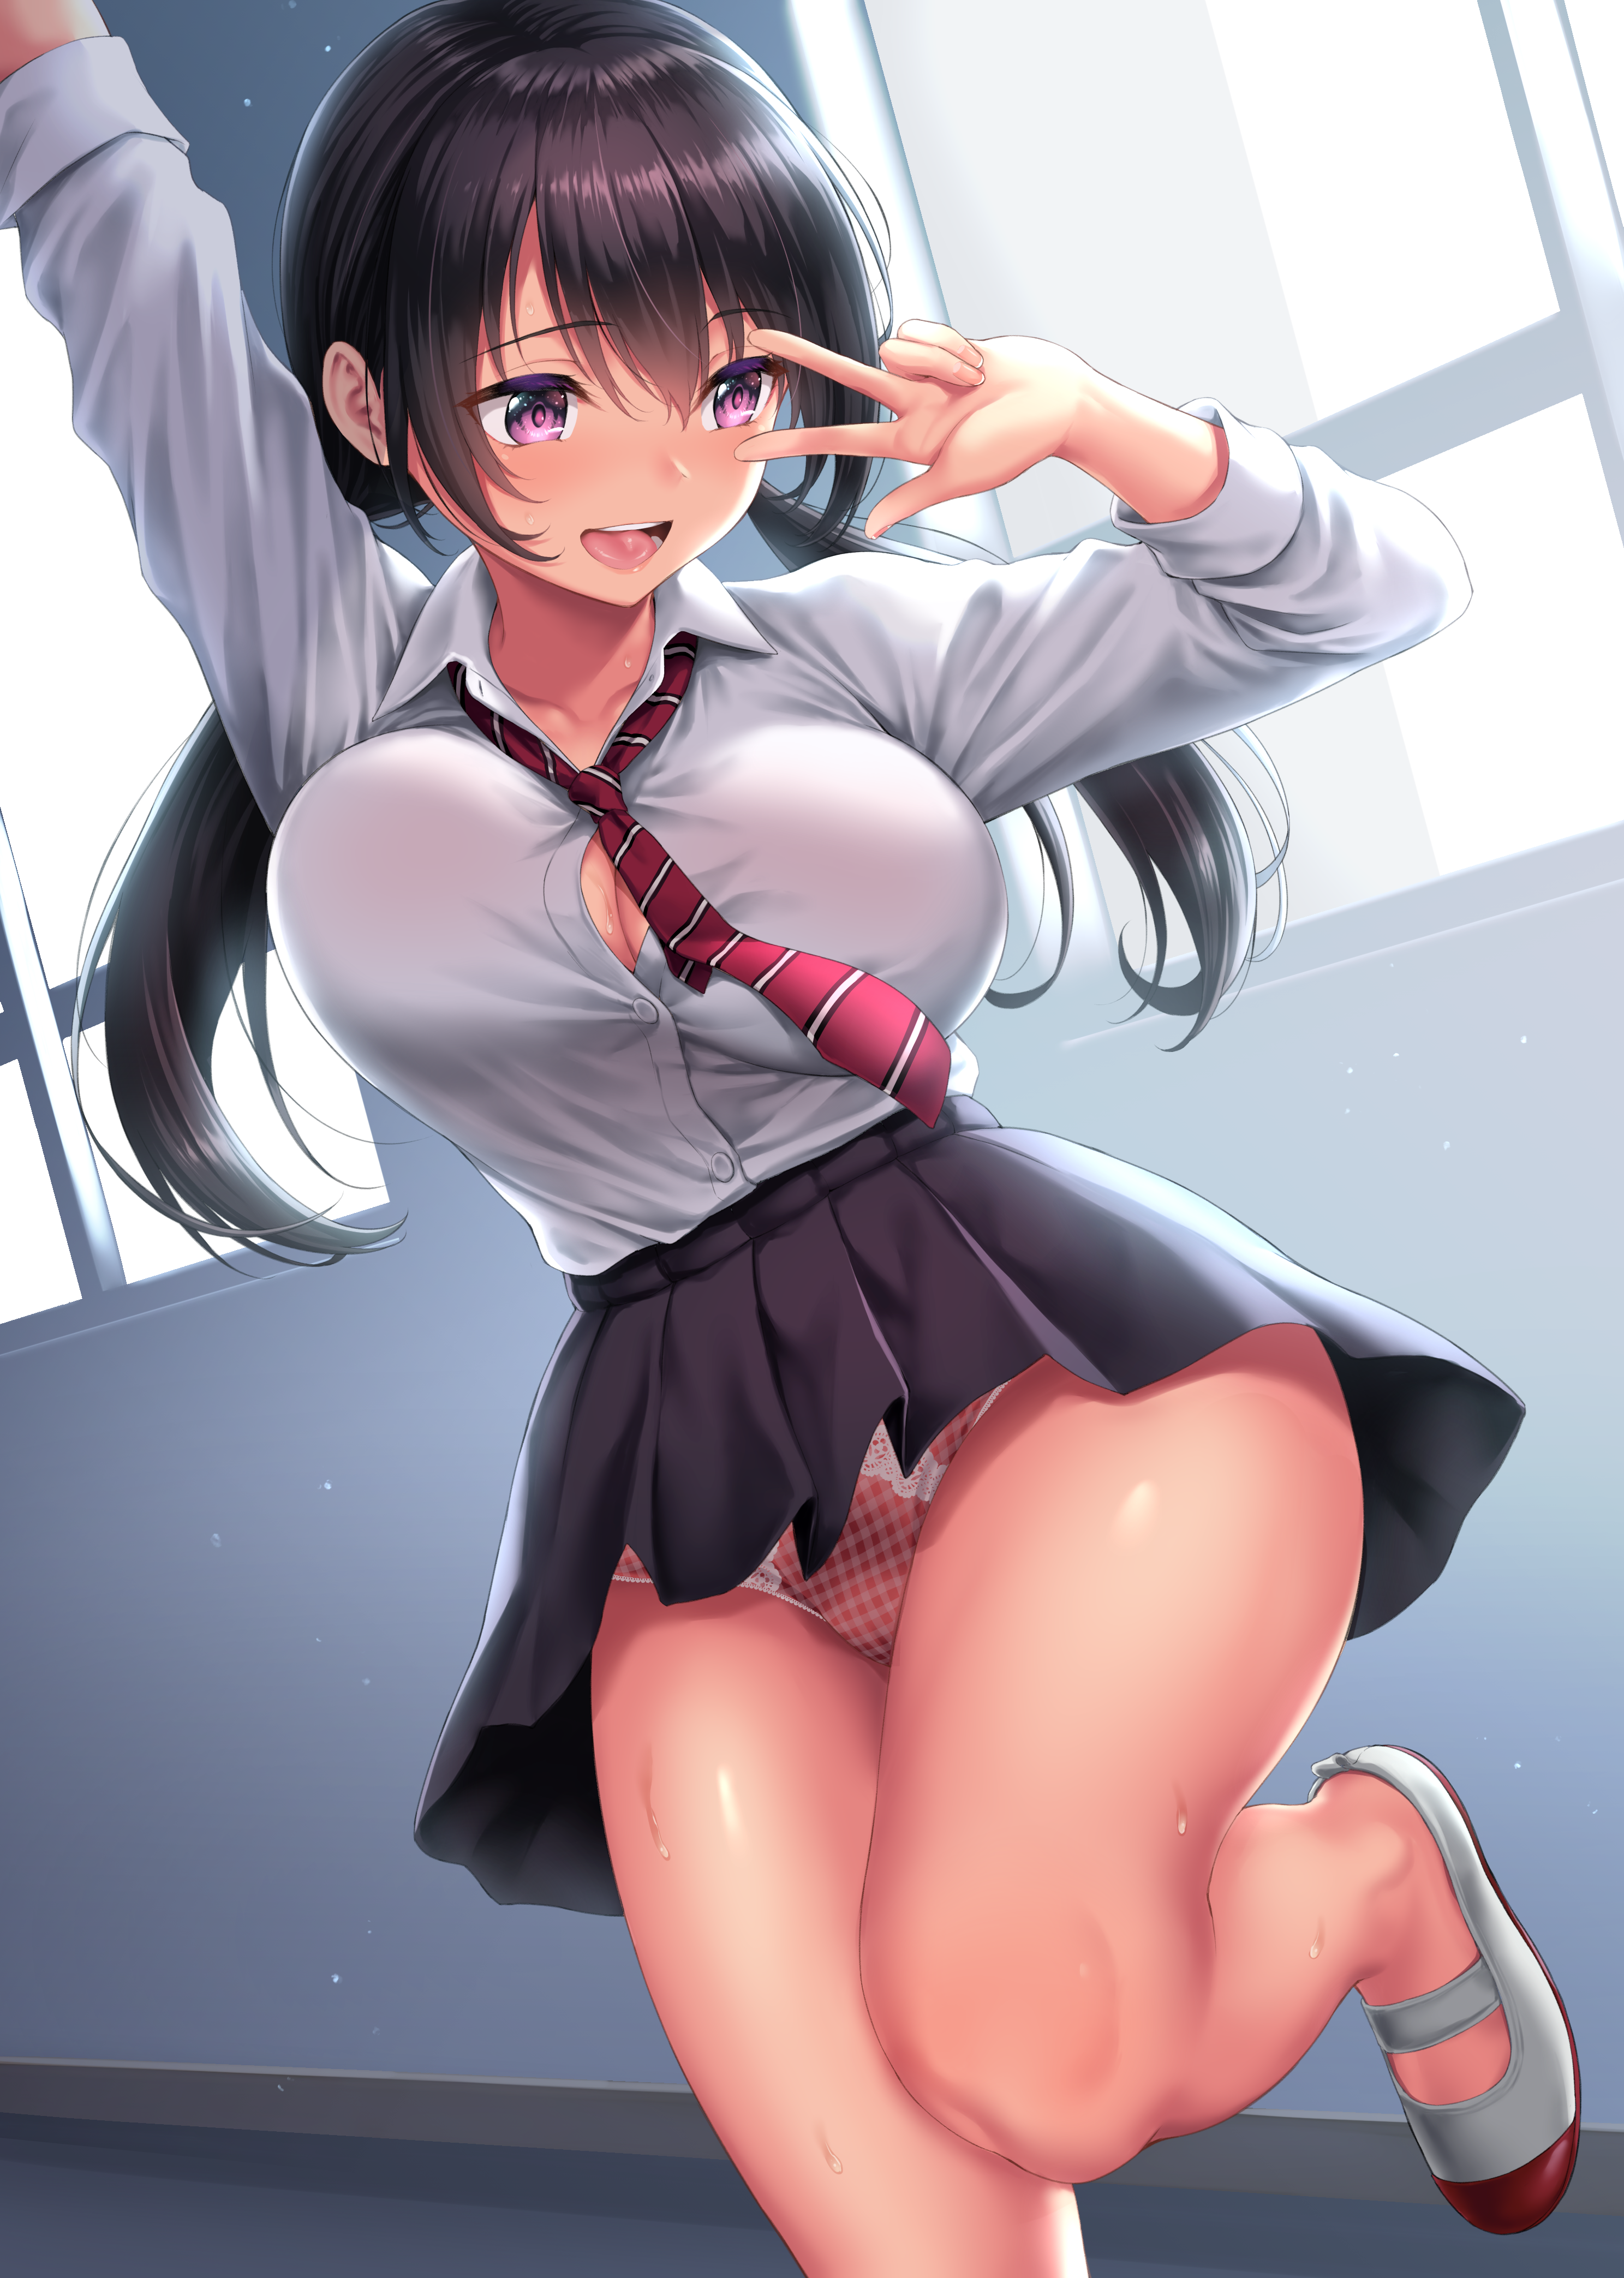 Anime 2976x4175 anime anime girls Kase Daiki school uniform upskirt panties cleavage original characters